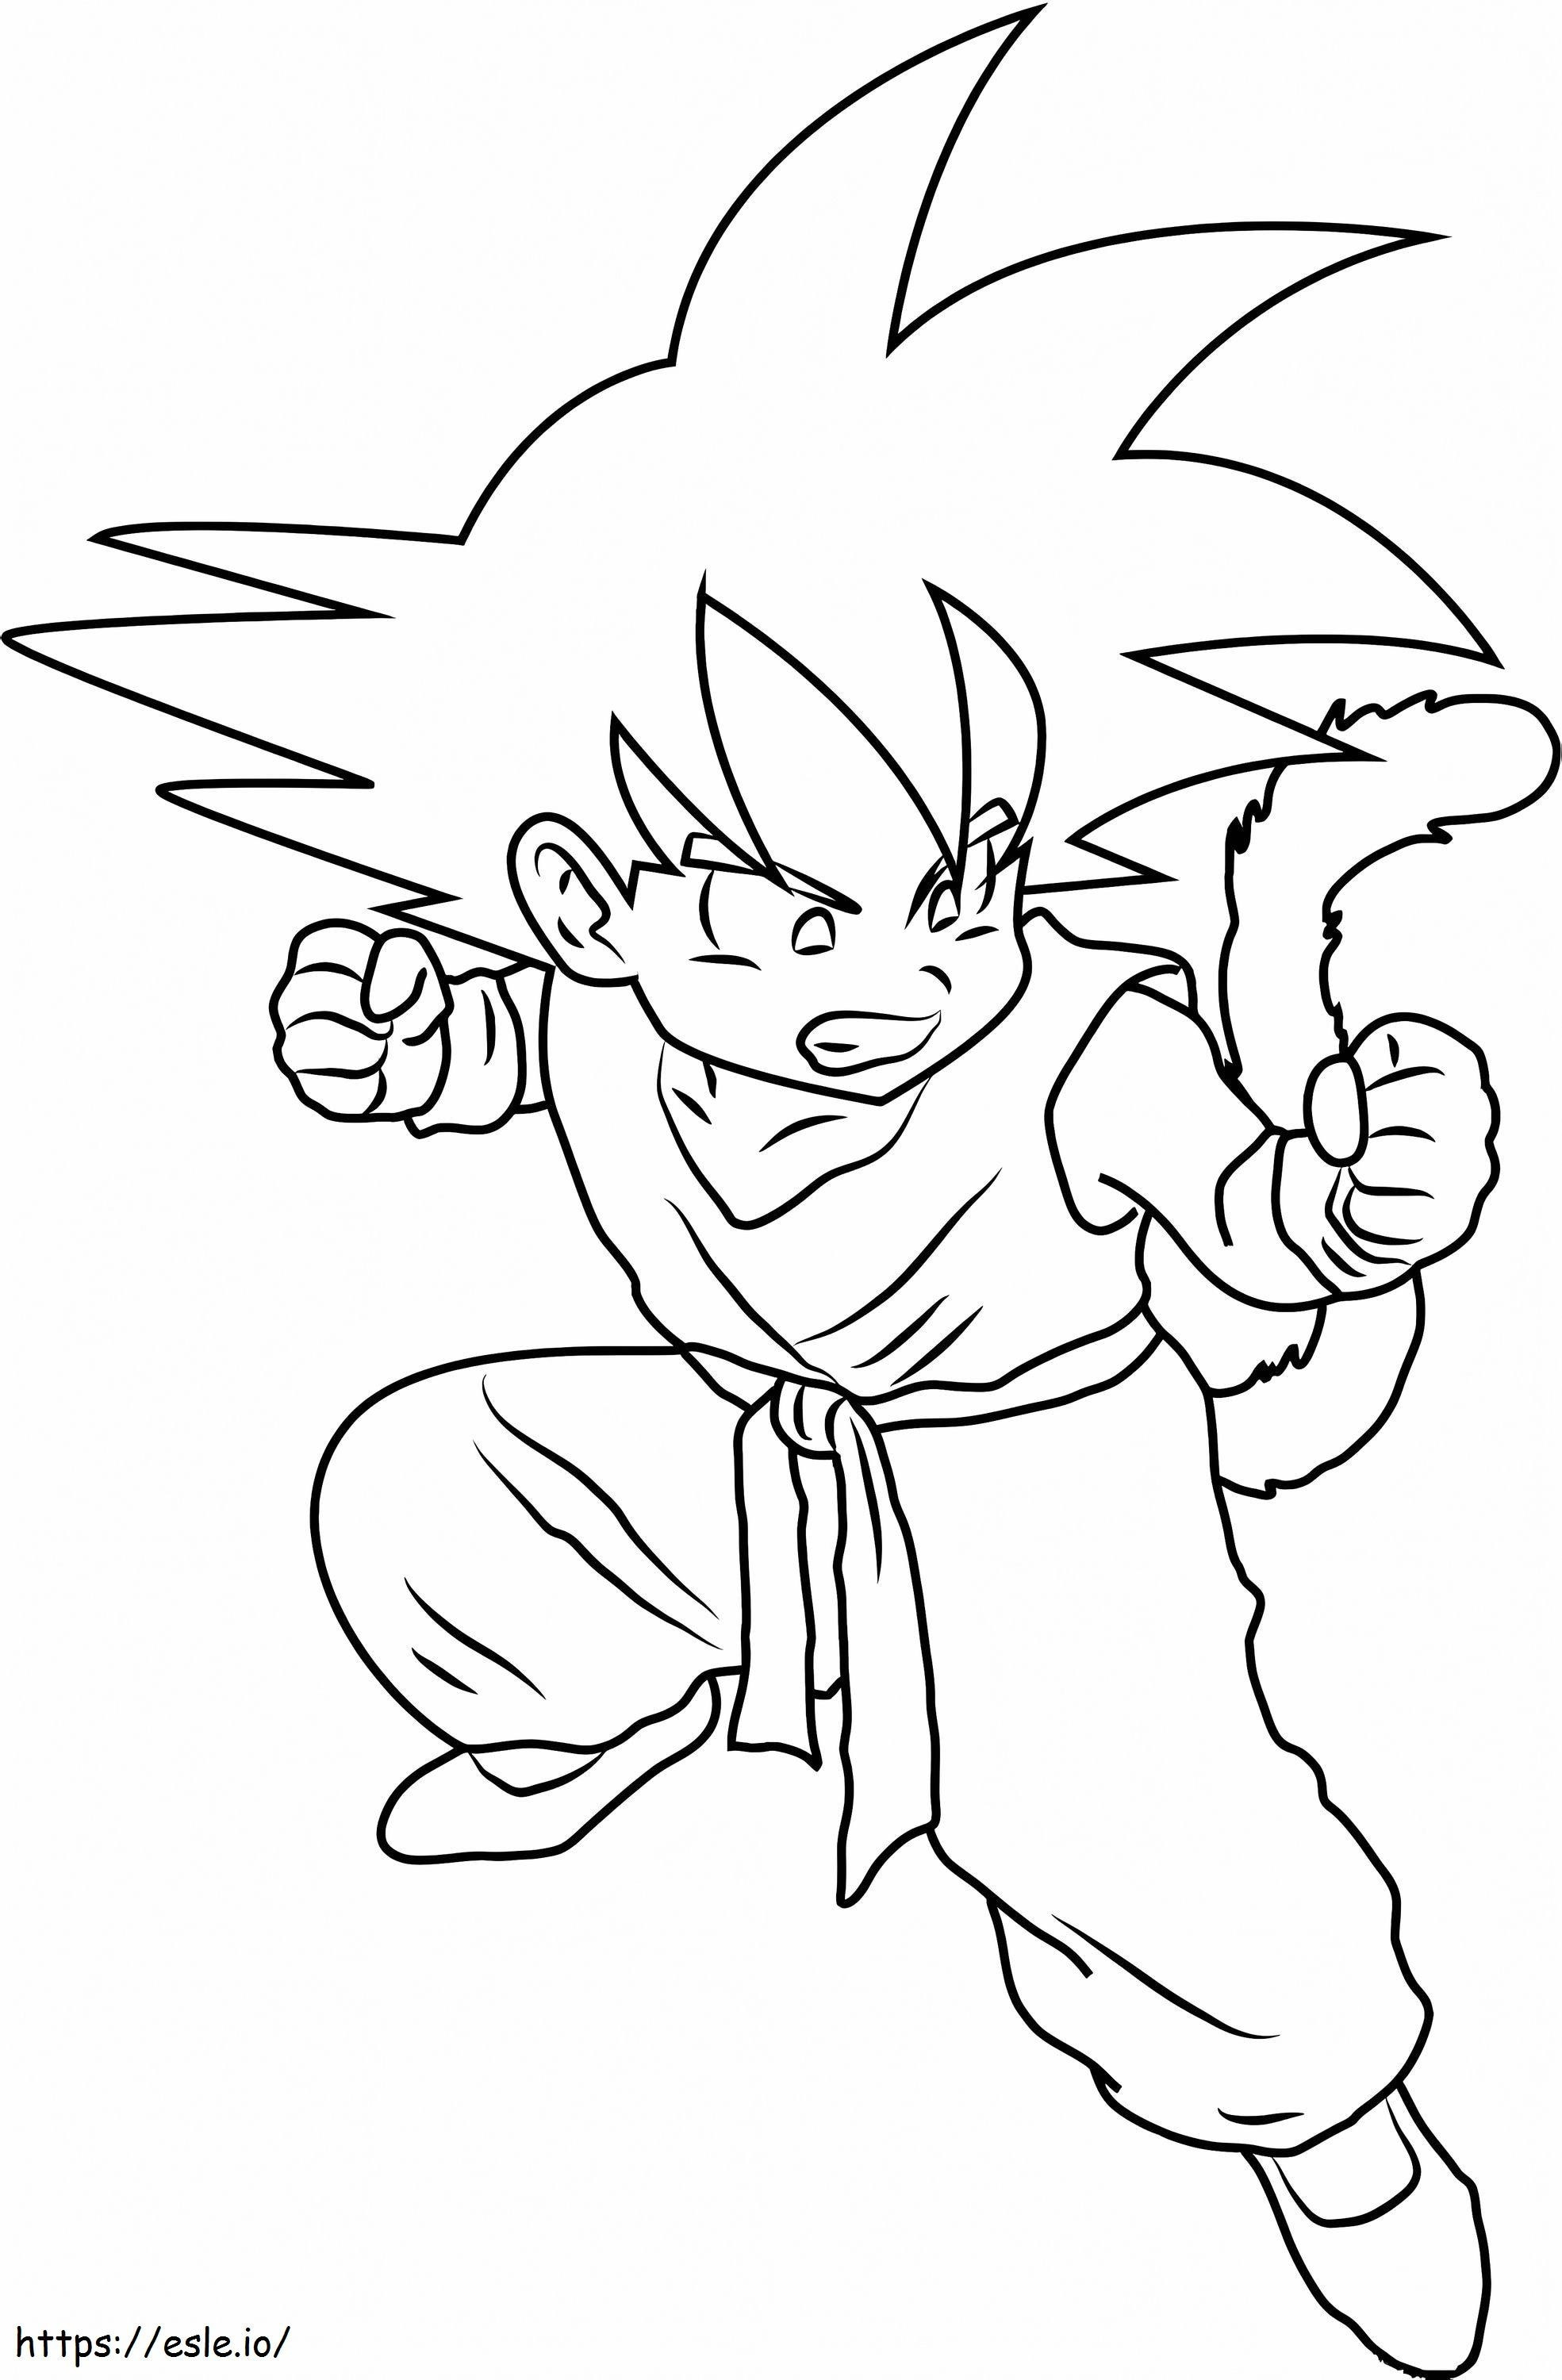 Nino Enojado Goku coloring page